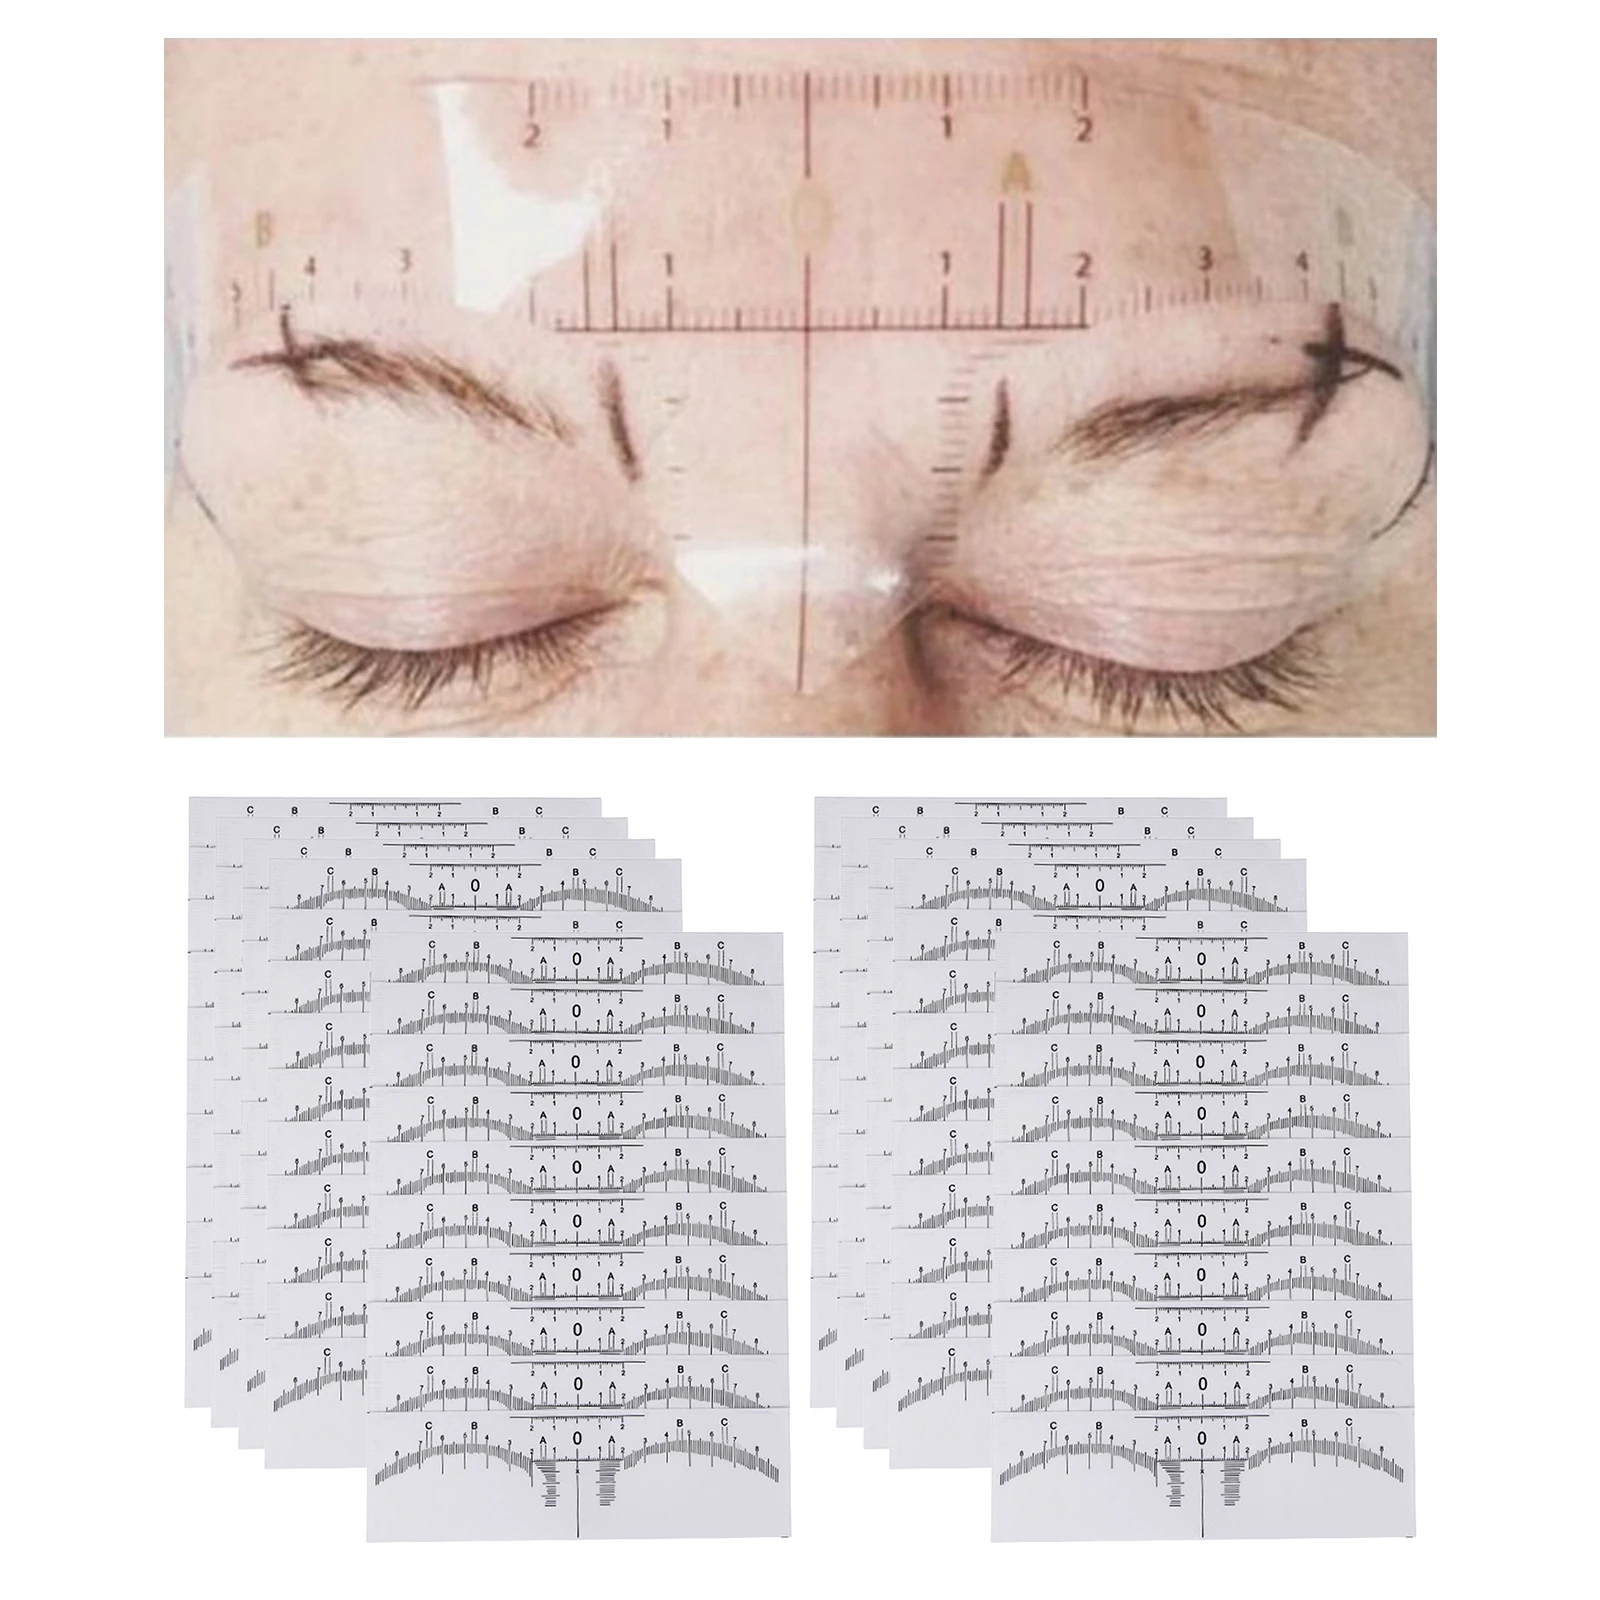 100 pieces Eyebrow Ruler Shaper Eyebrow Stencil Microblading Set